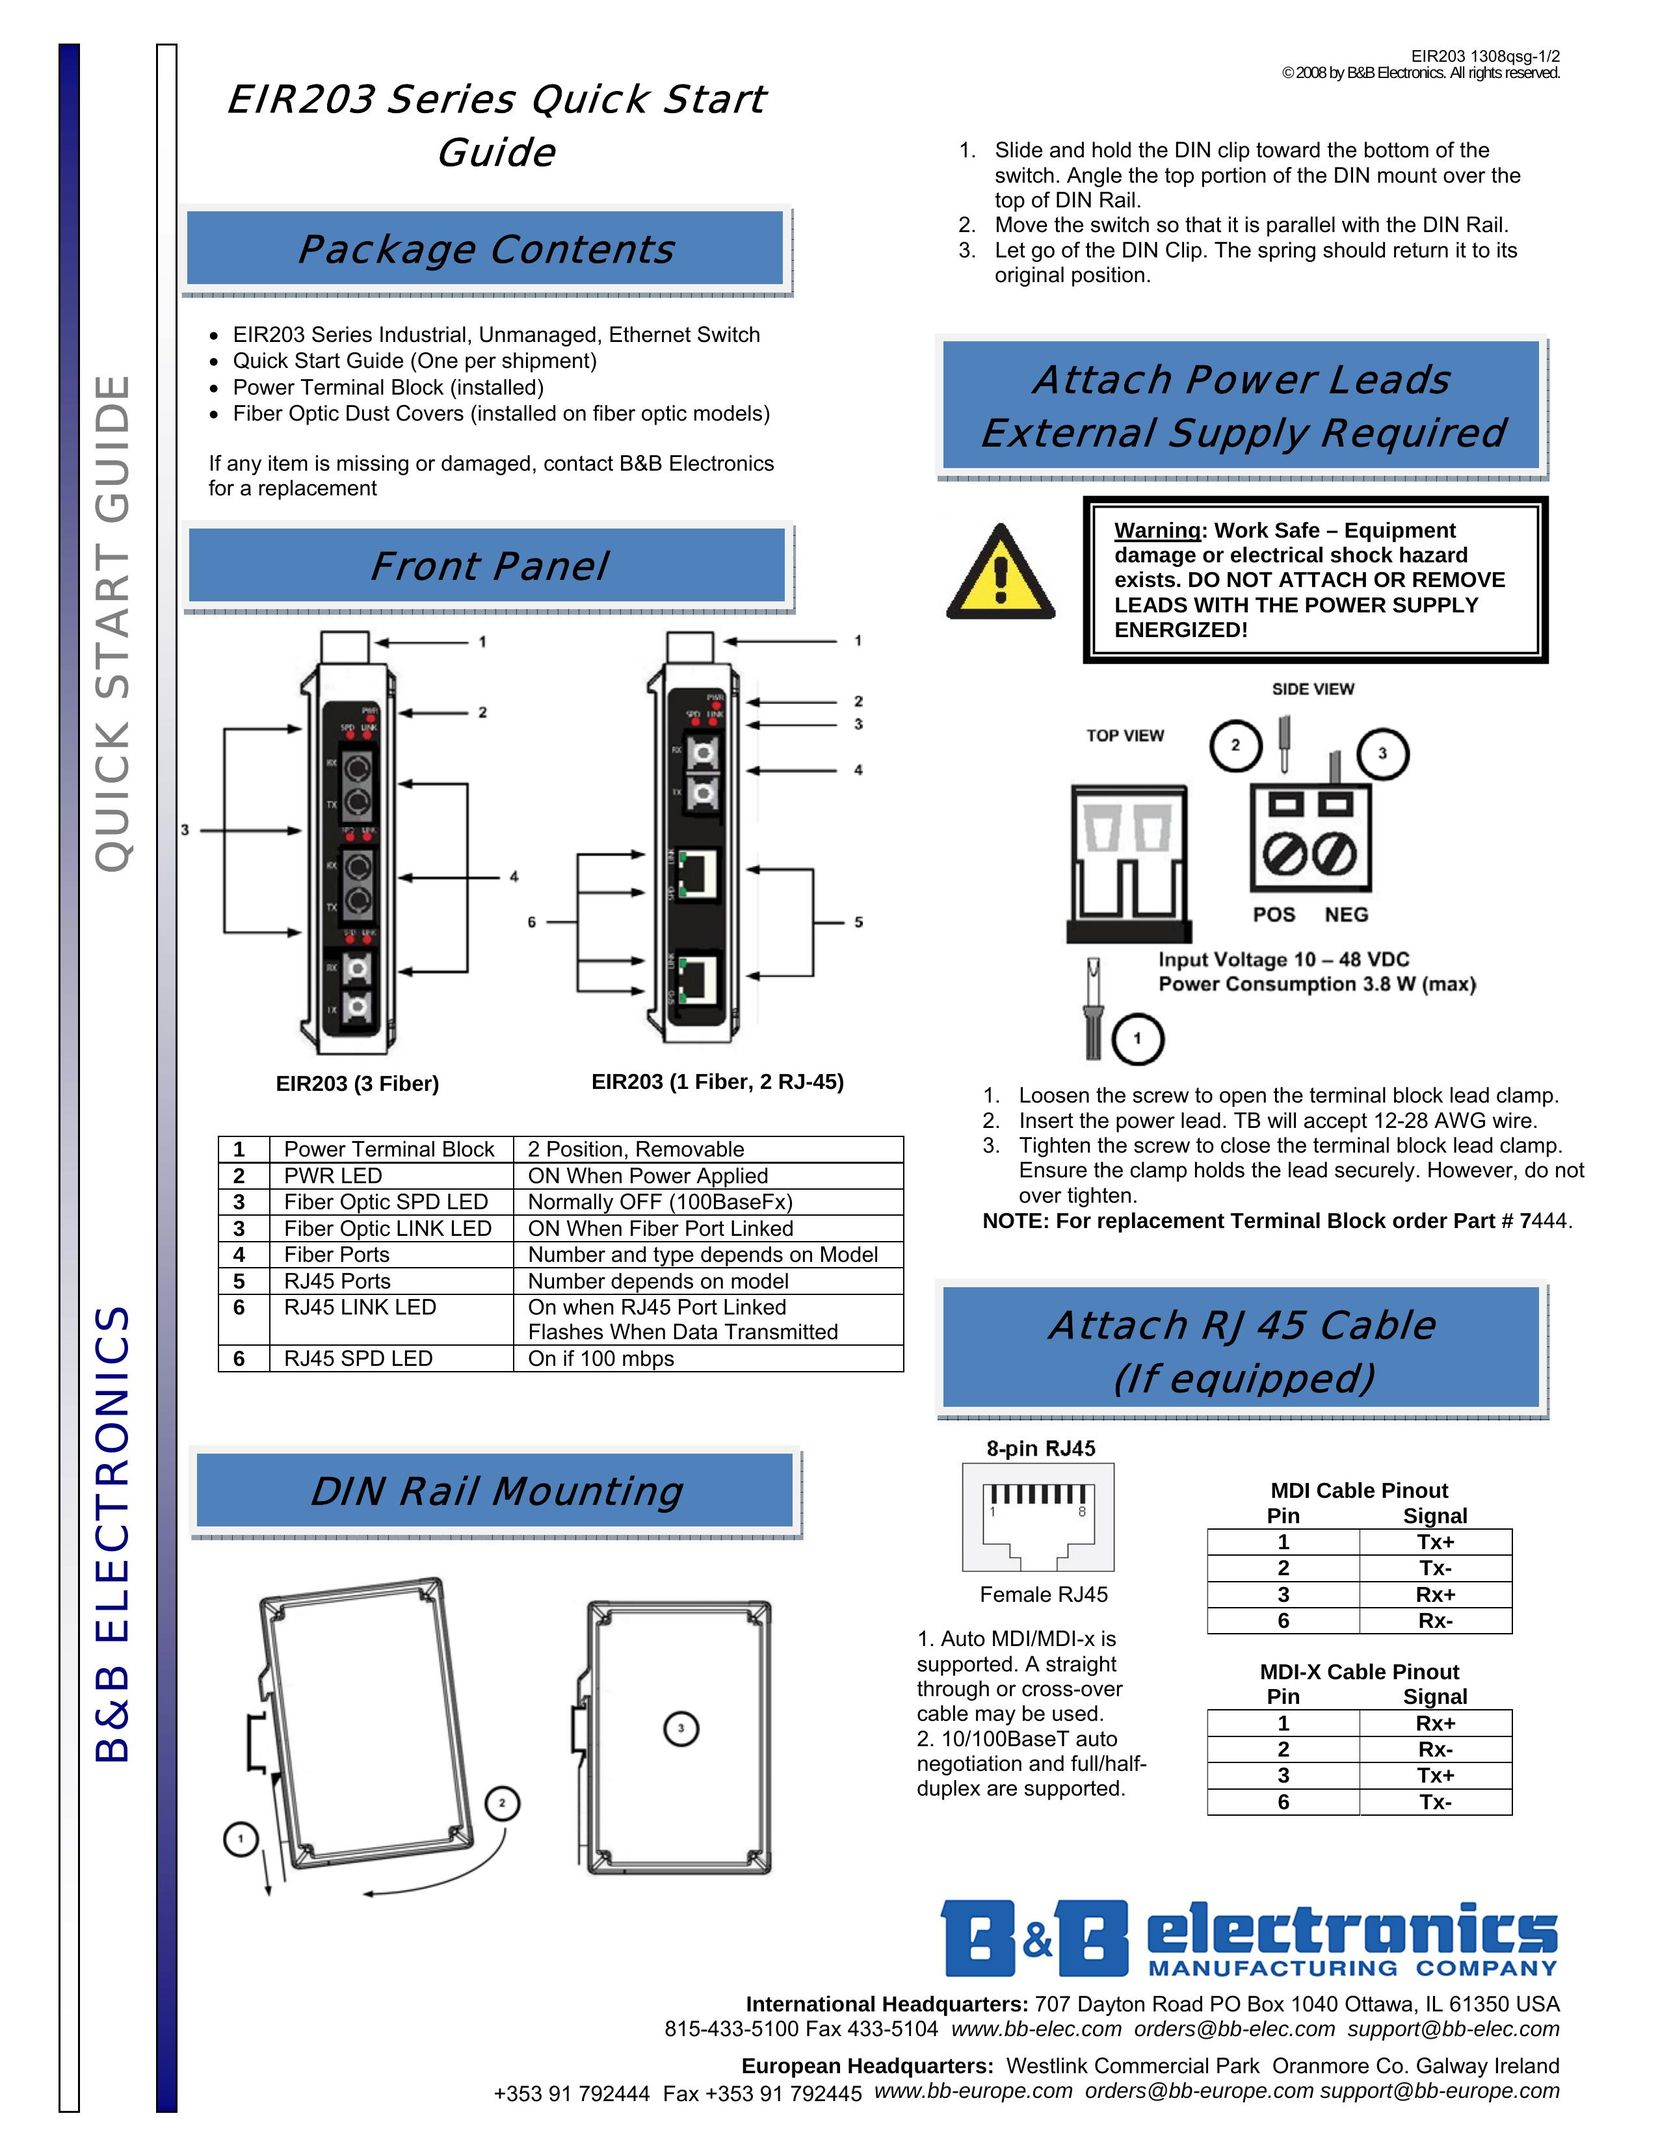 B&B Electronics EIR203-3ST Network Card User Manual